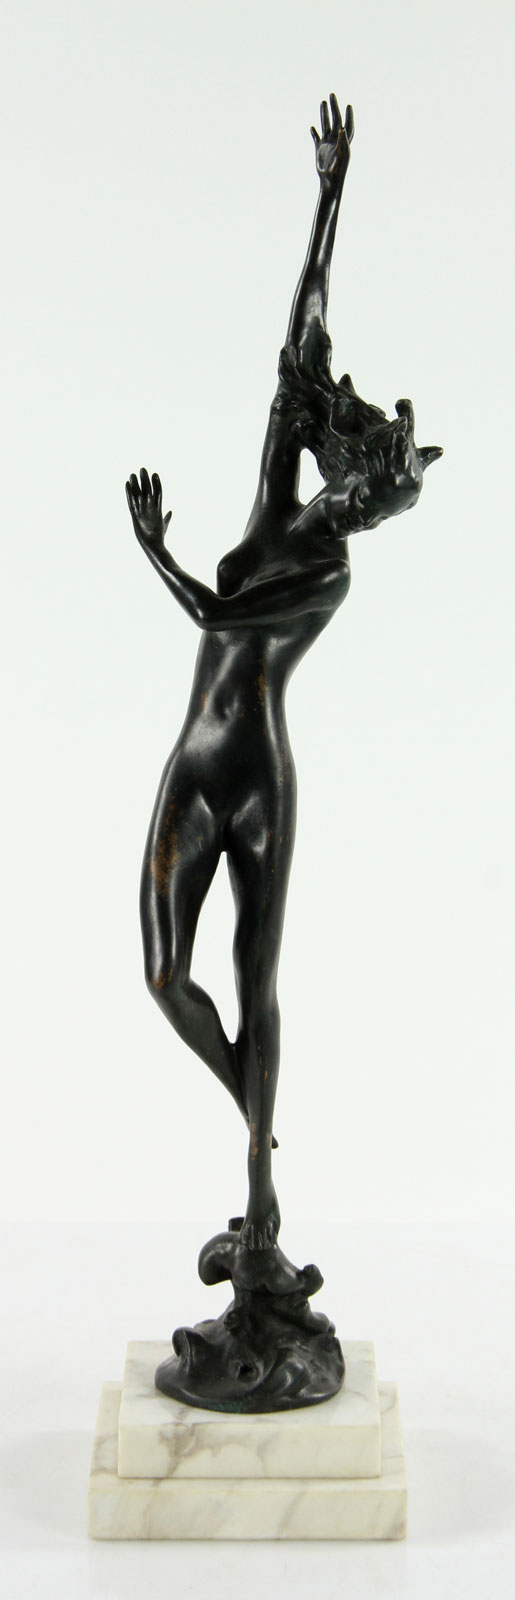 Harriet Whitney Frishmuth bronze "Crest of the Wave"